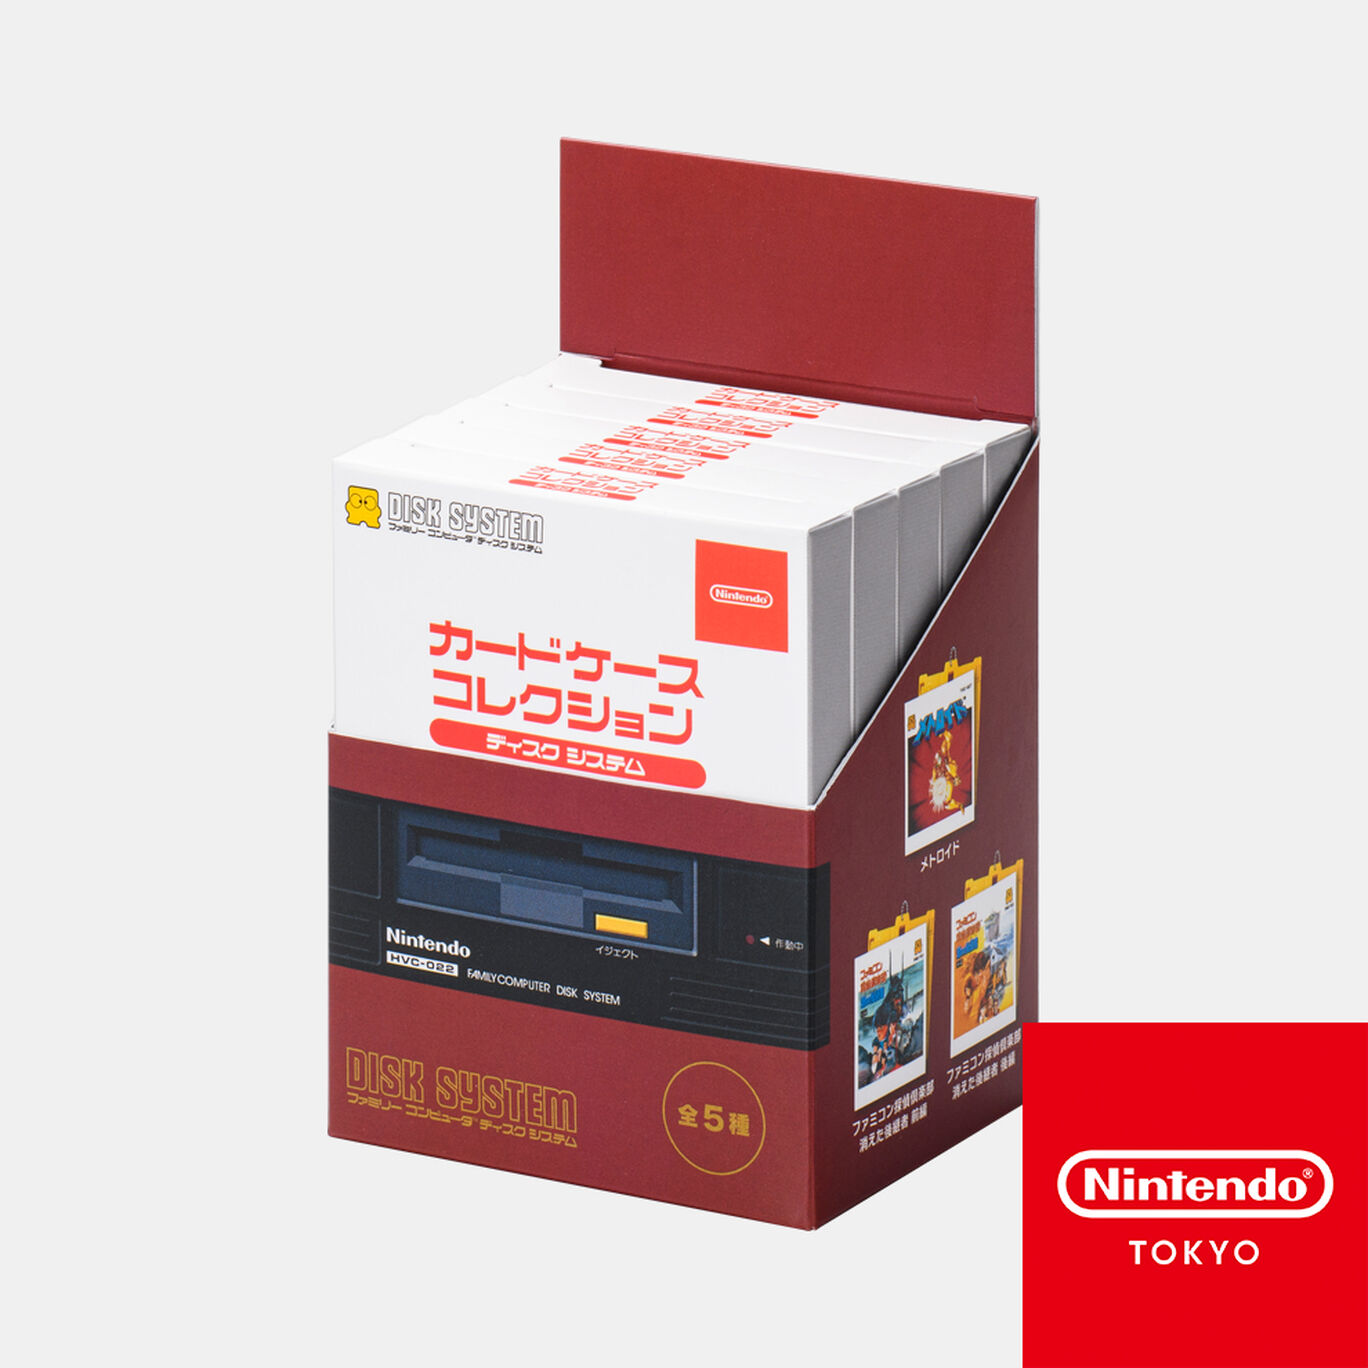 【BOX商品】カードケースコレクション ディスクシステム【Nintendo TOKYO取り扱い商品】